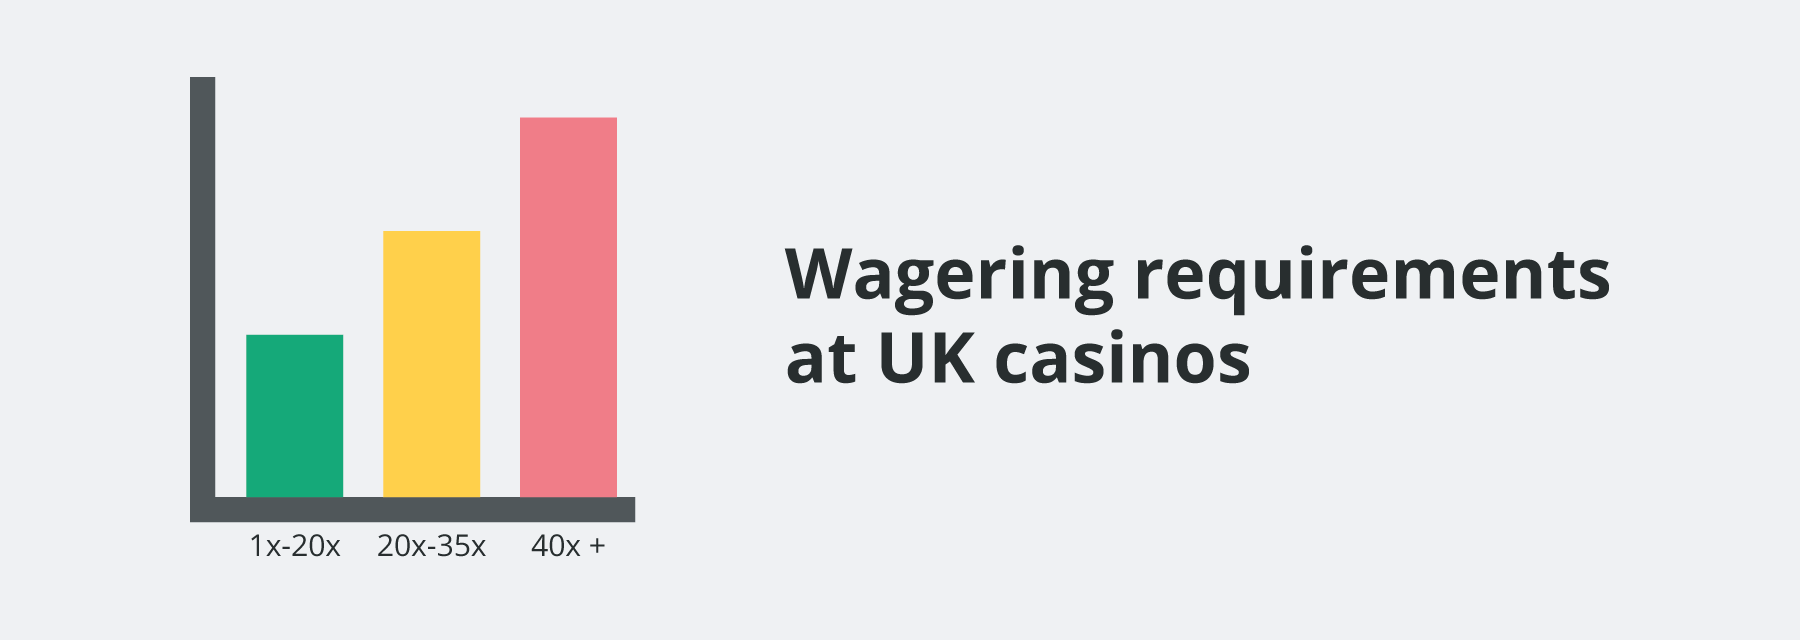 best online casino uk no wagering requirements